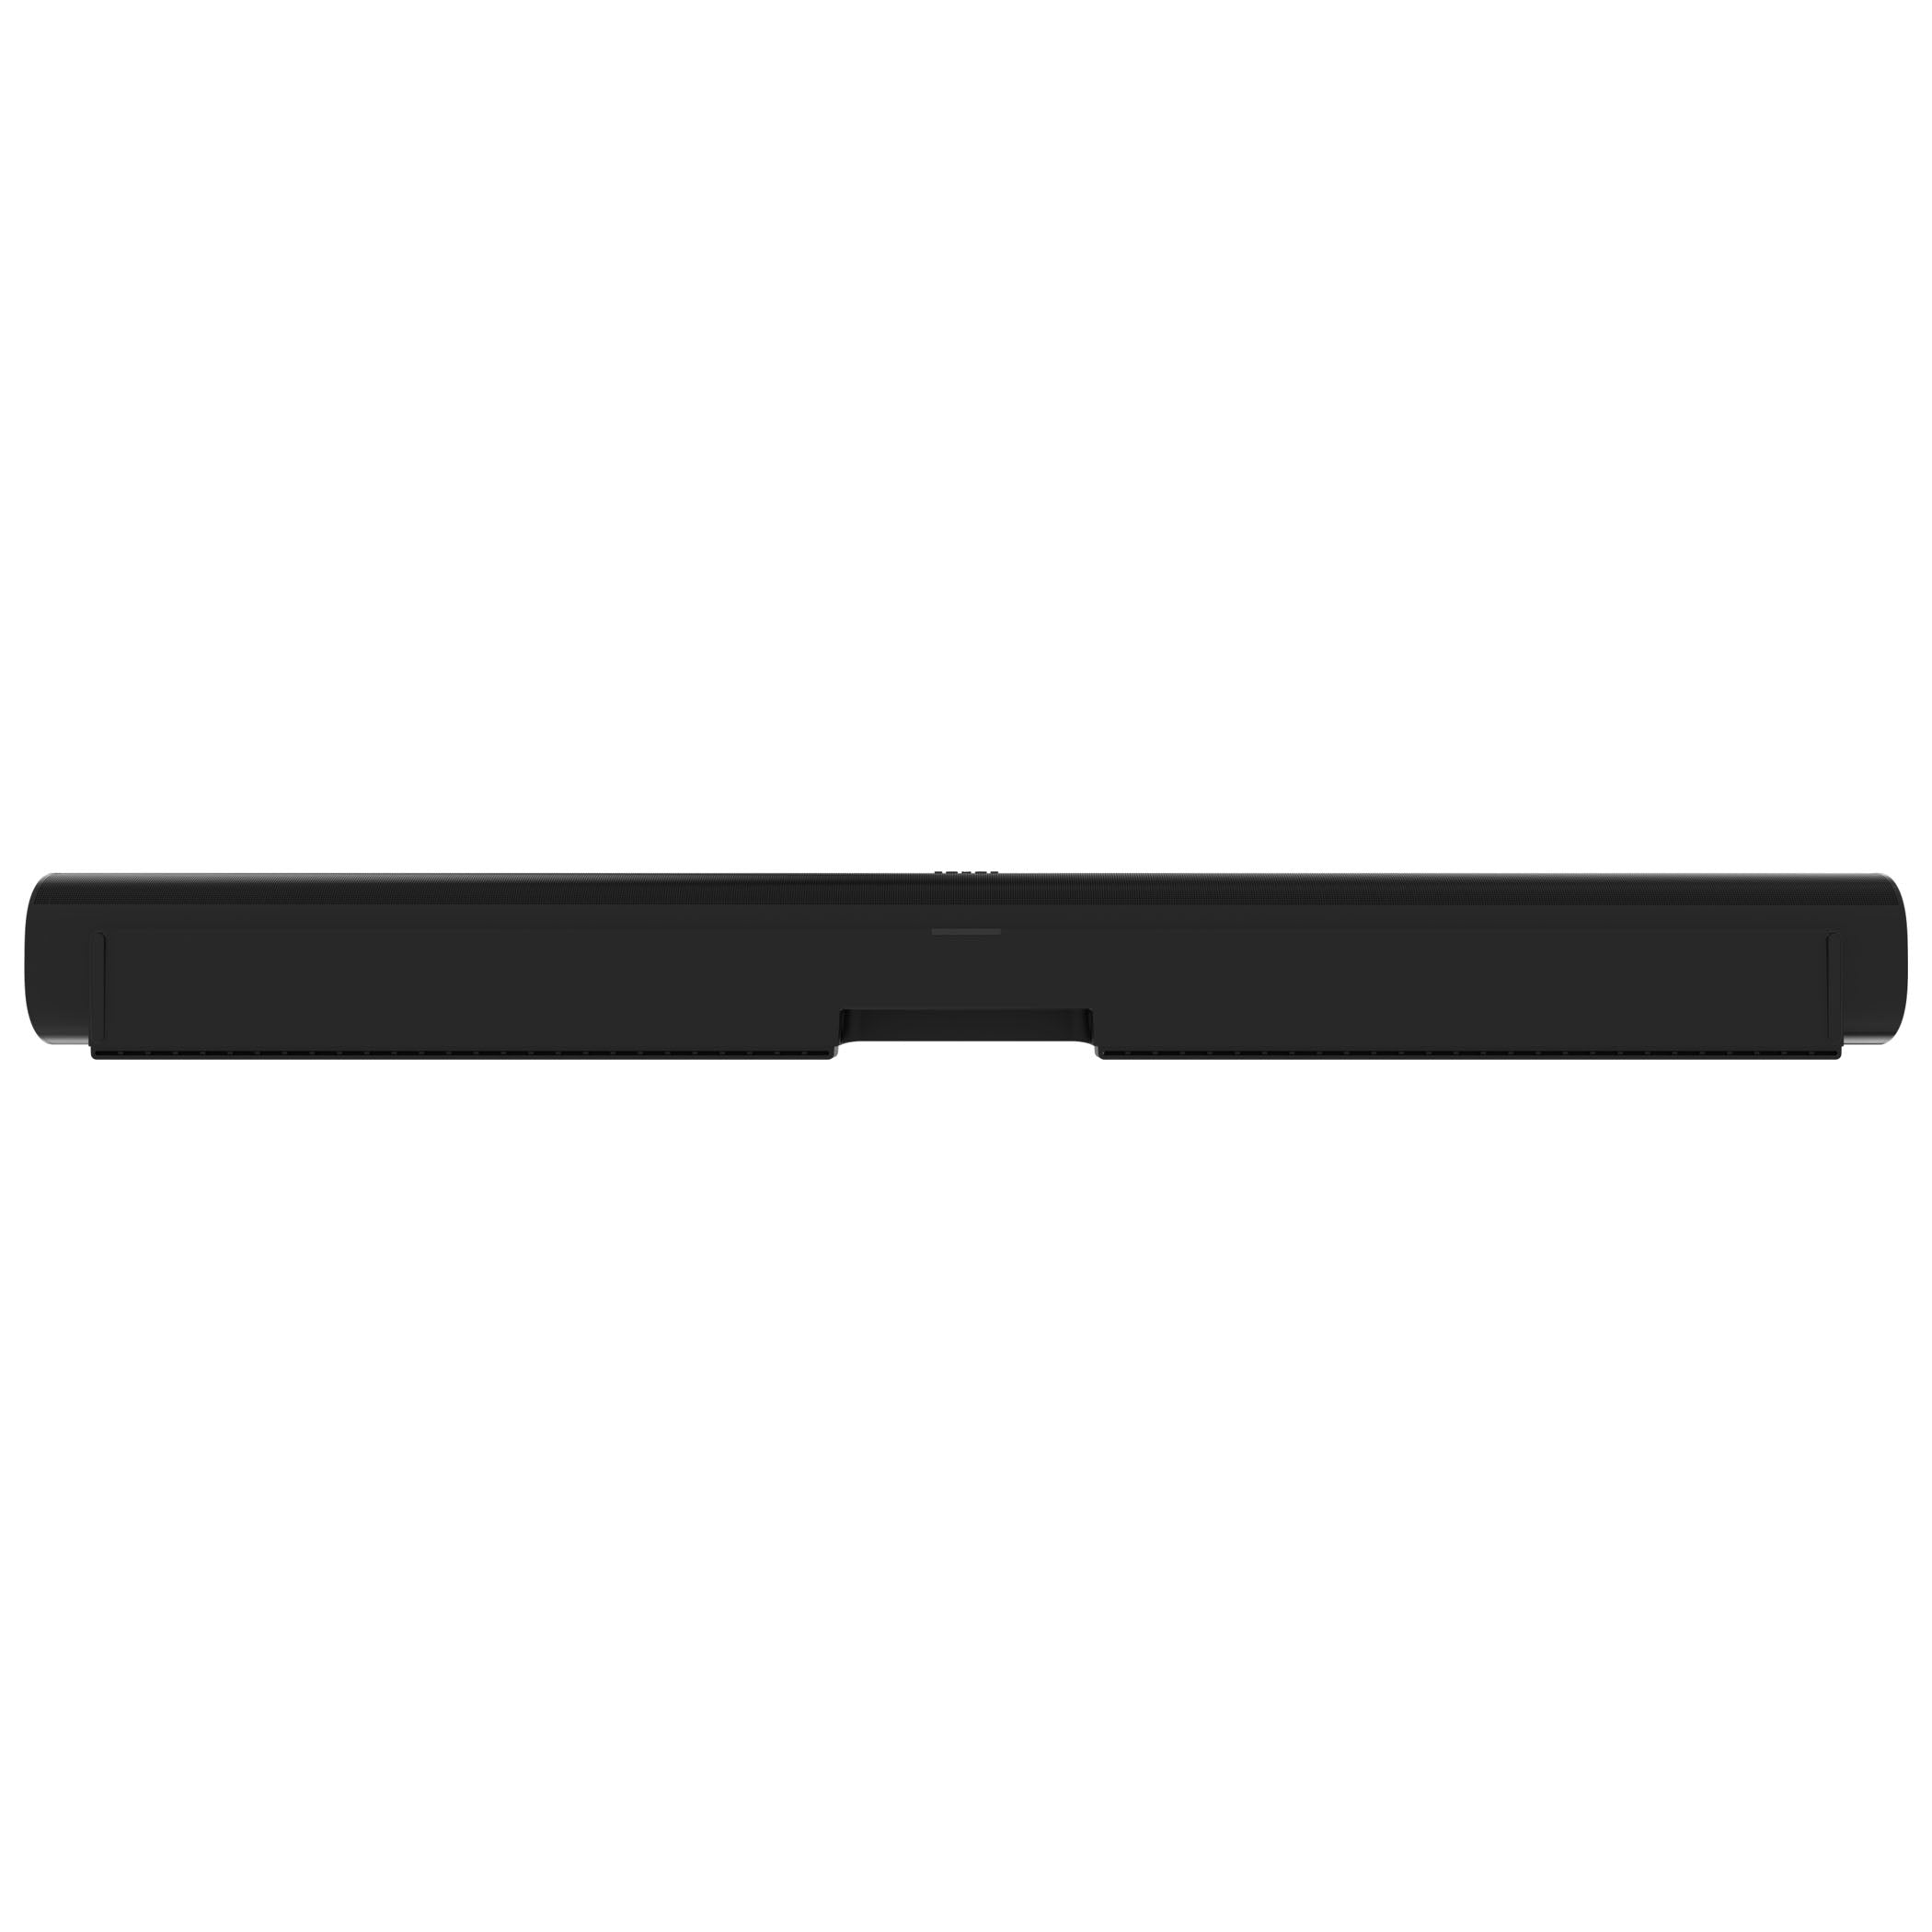 Sonos Arc - The Premium Smart Soundbar